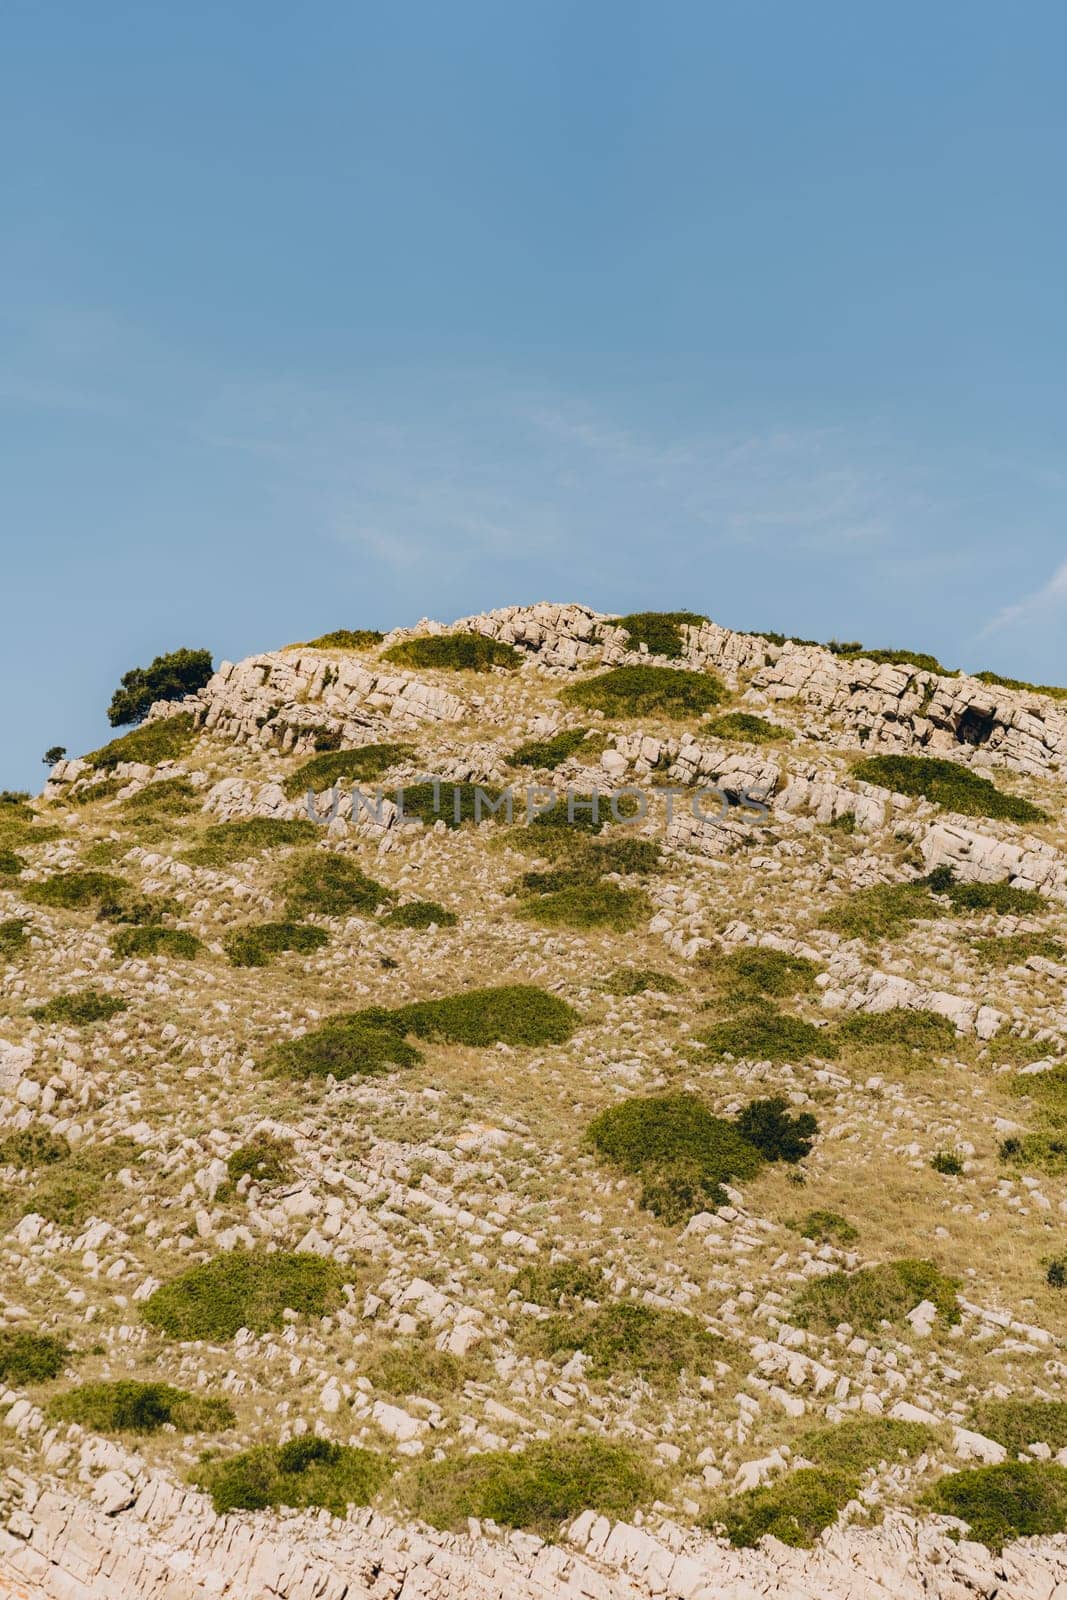 Scenic hill with stones and dry grass, idyllic nature landscape of Dugi Otok island in Adriatic Sea, Croatia